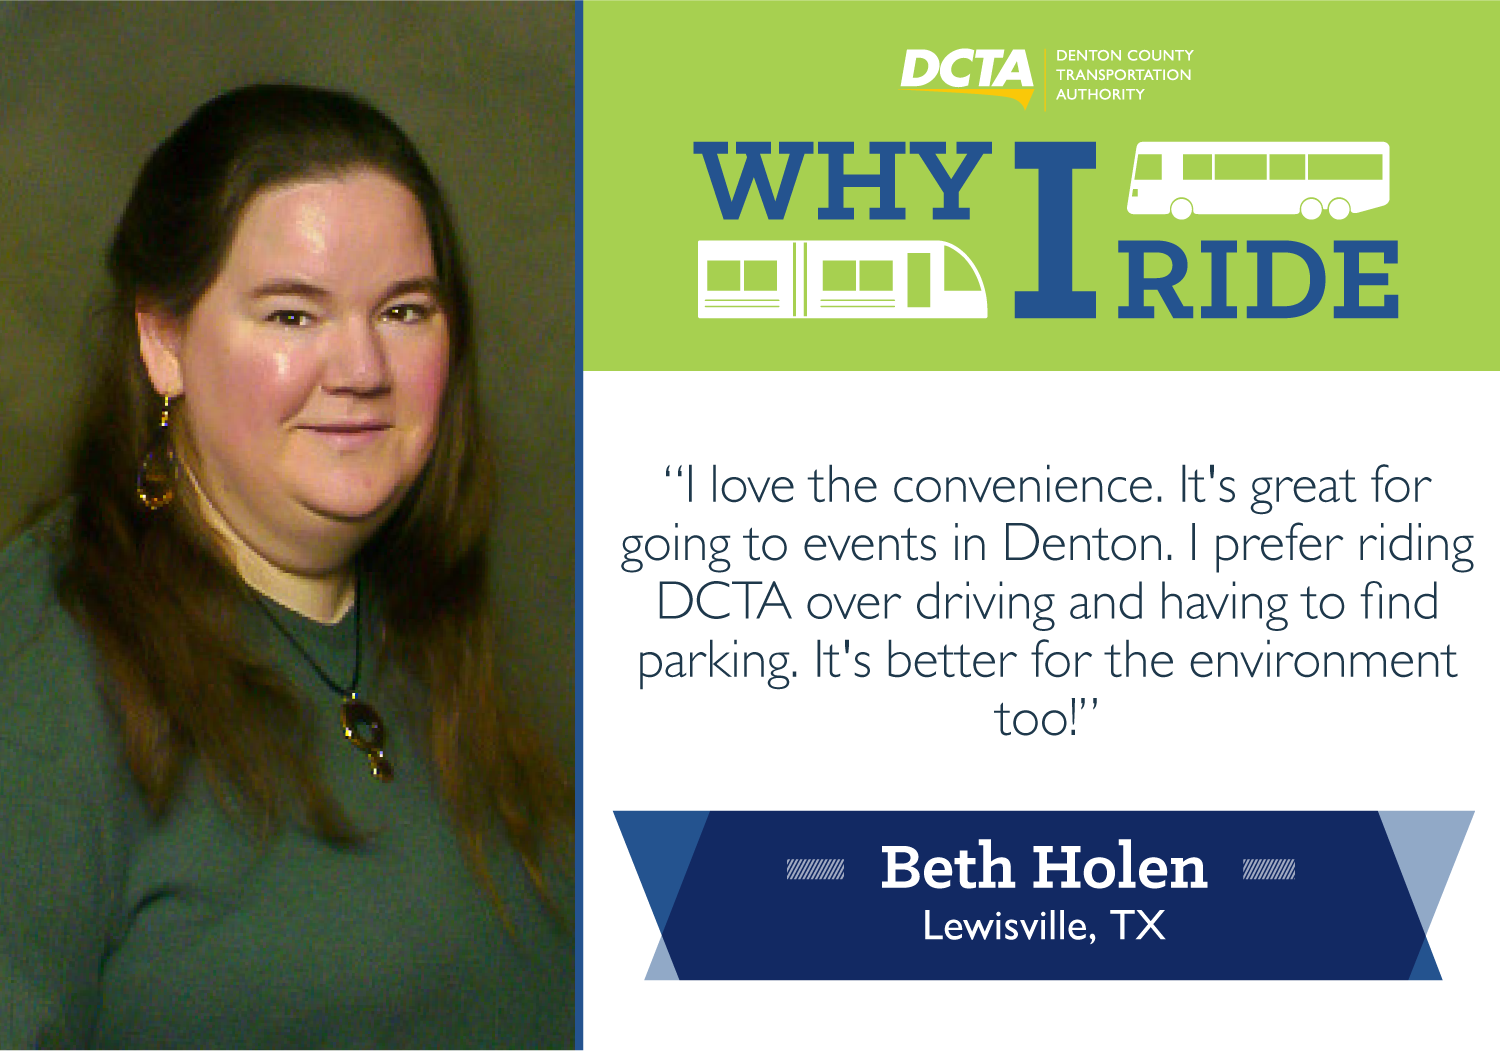 #WhyIRideDCTA: Beth Holen